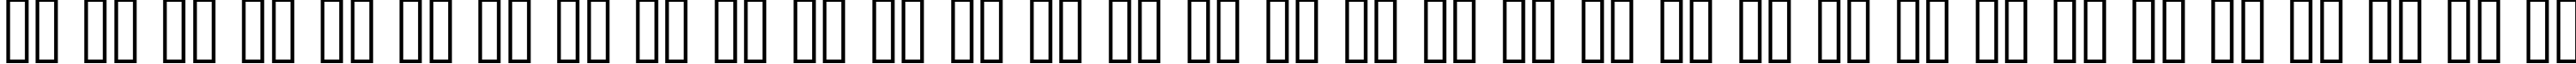 Пример написания русского алфавита шрифтом Prince Valiant